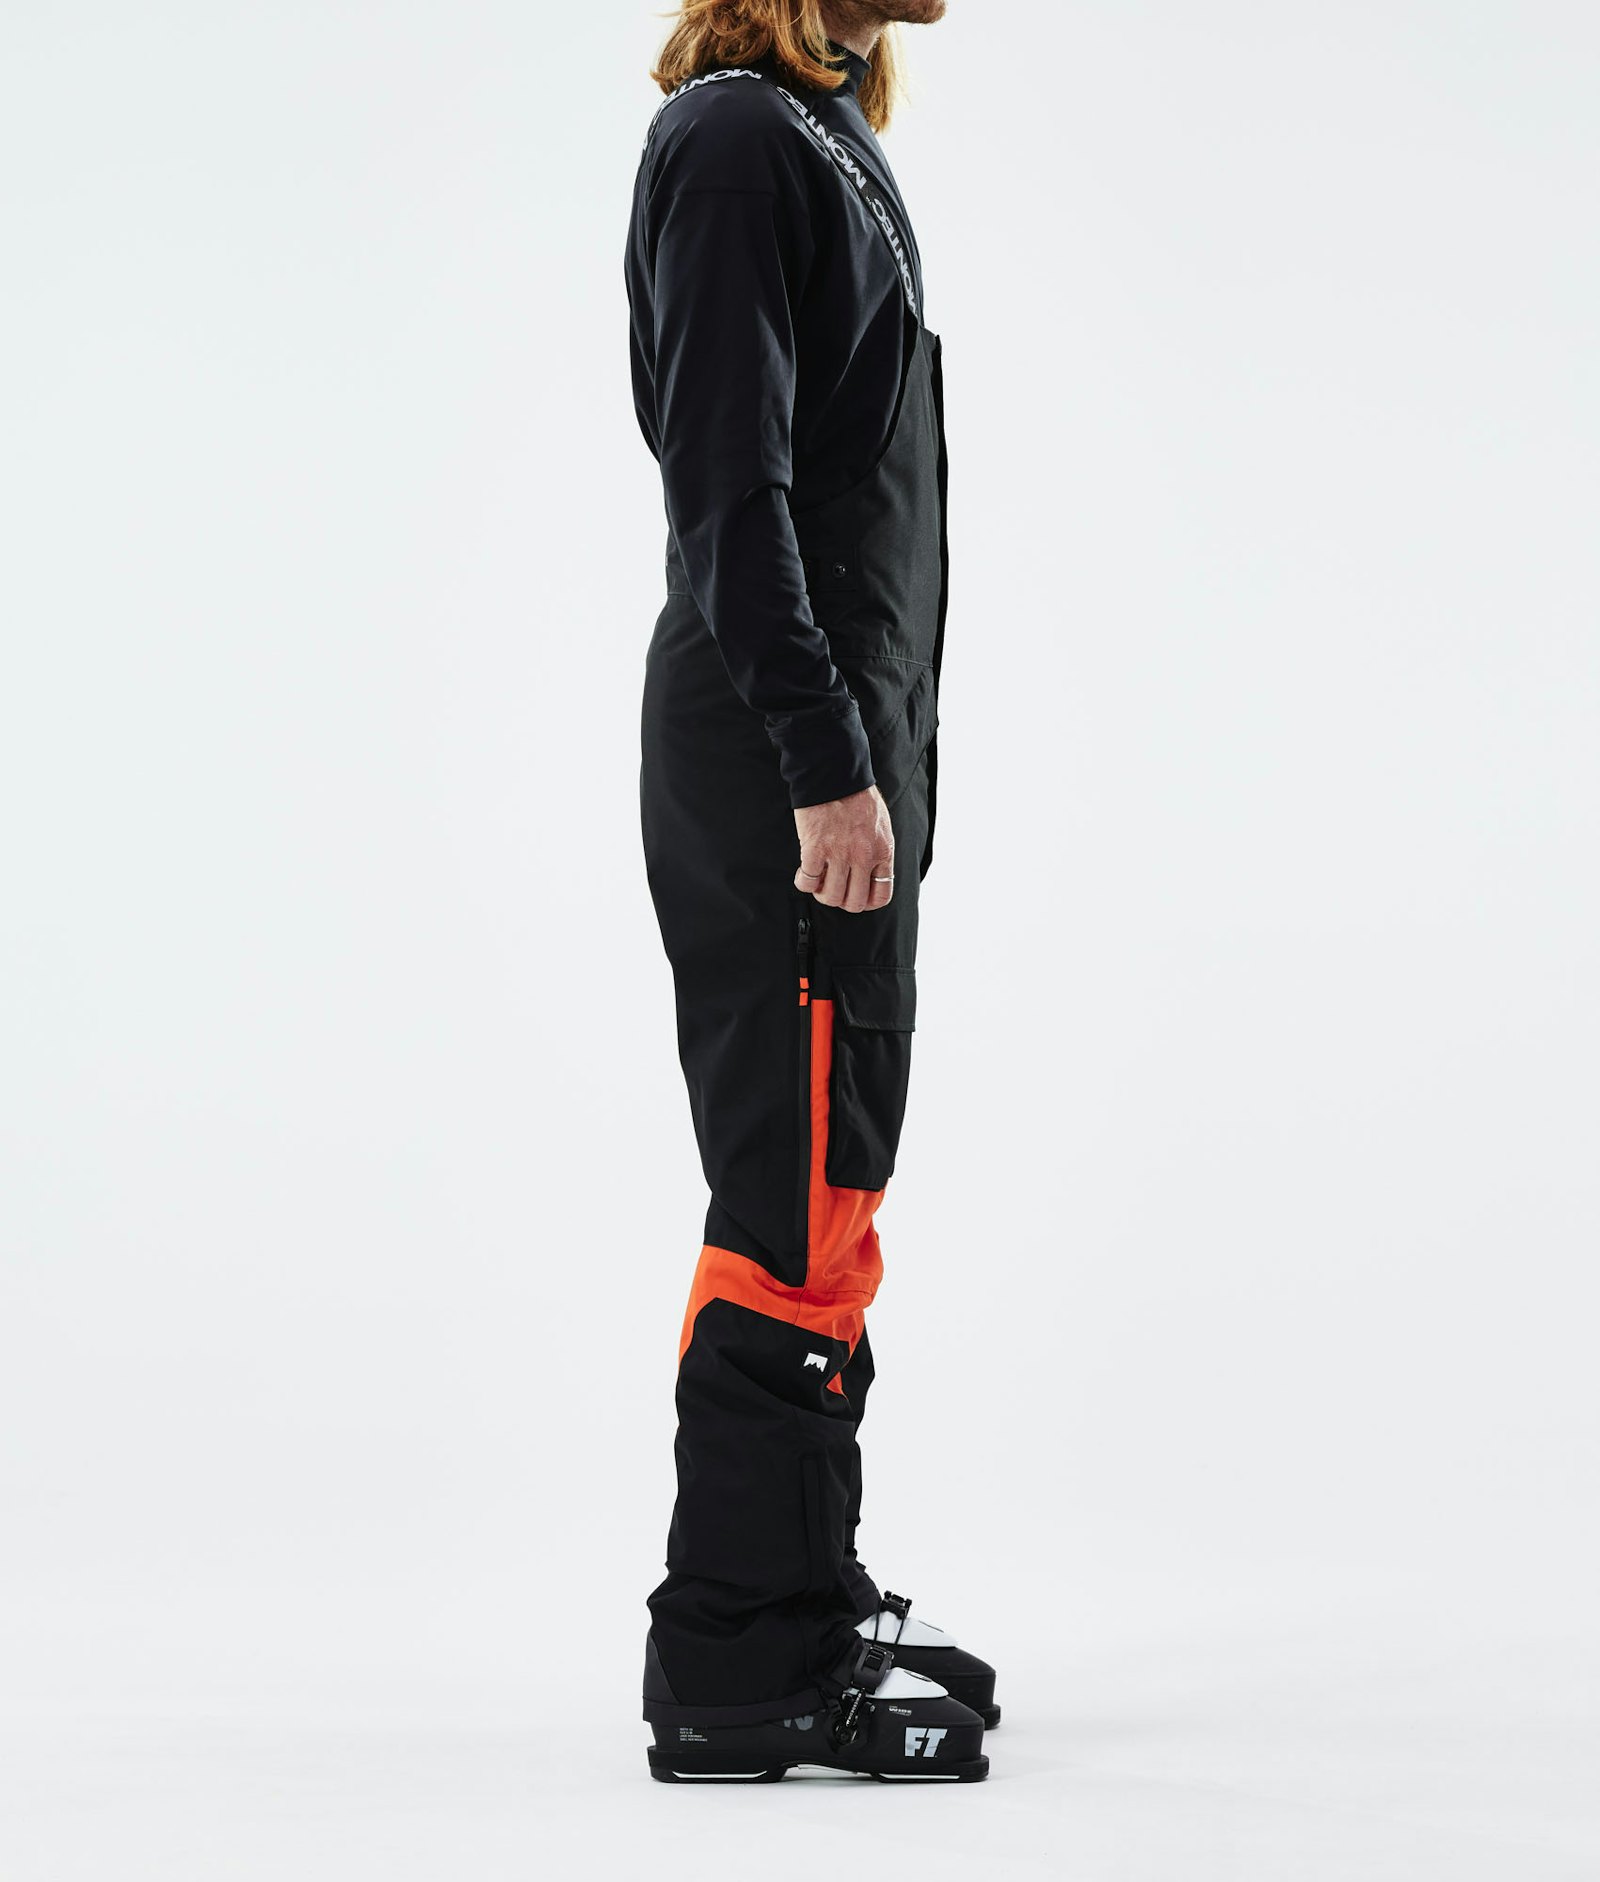 Fawk 2021 Pantalon de Ski Homme Black/Orange